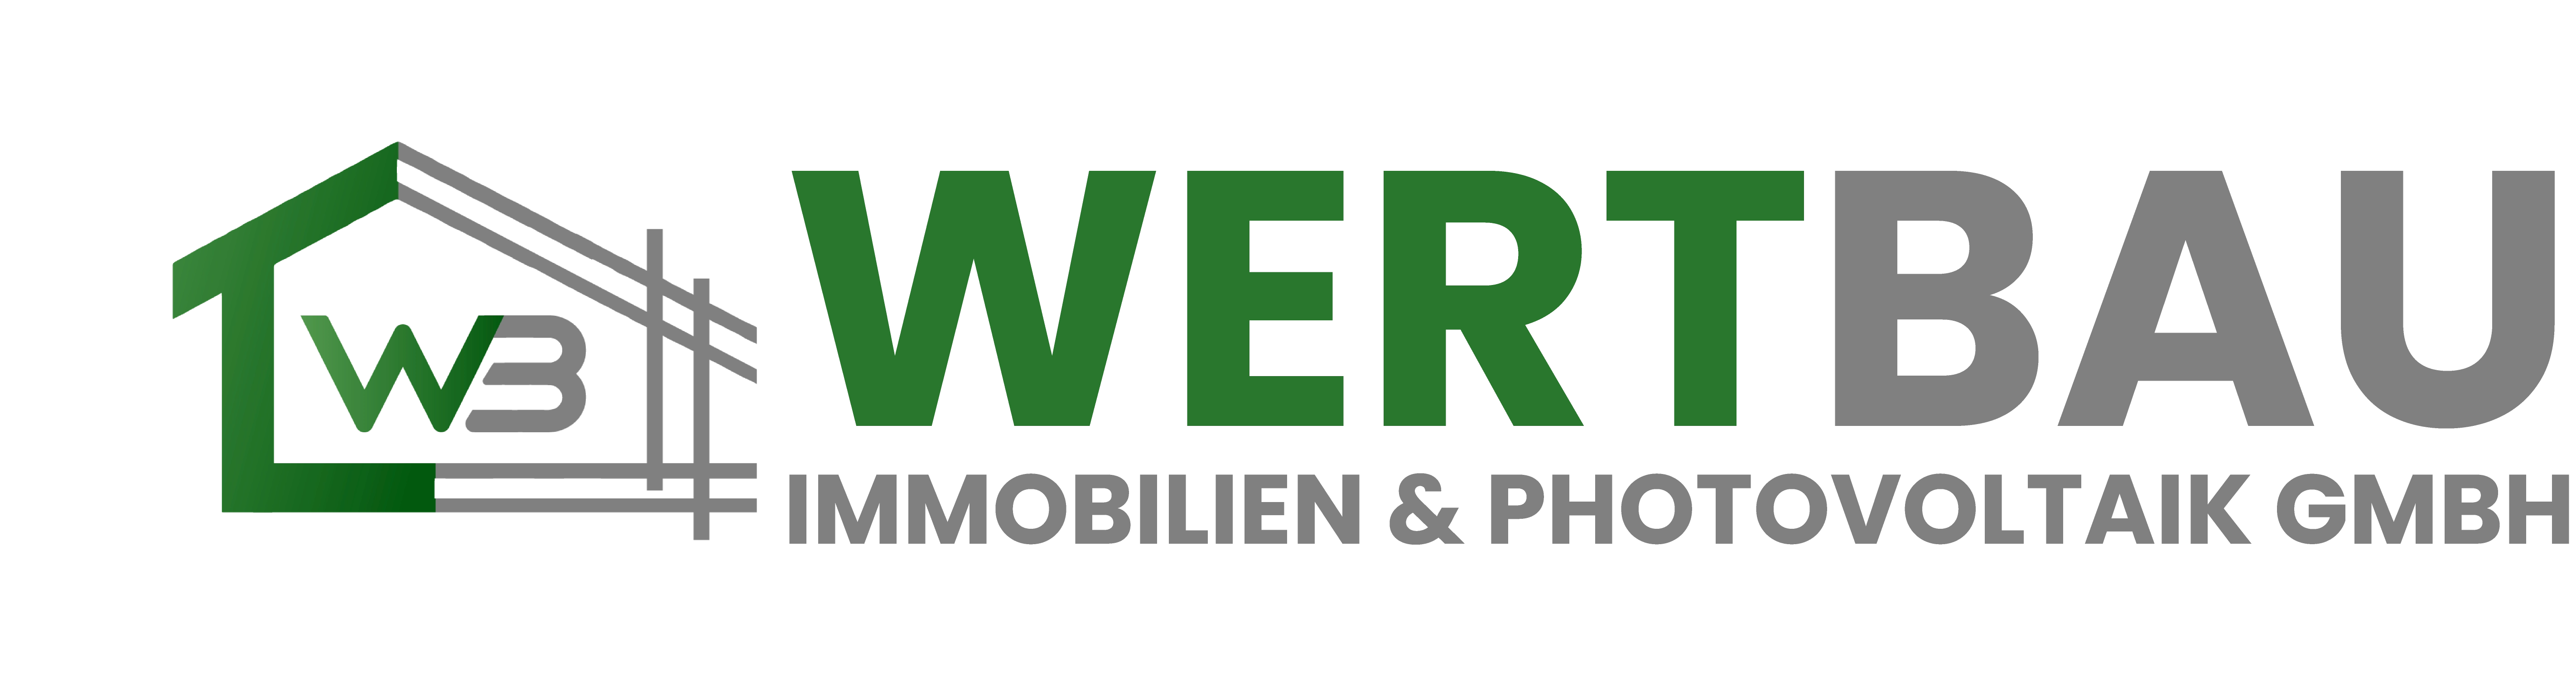 WERTBAU Immobilien & Photovoltaik GmbH